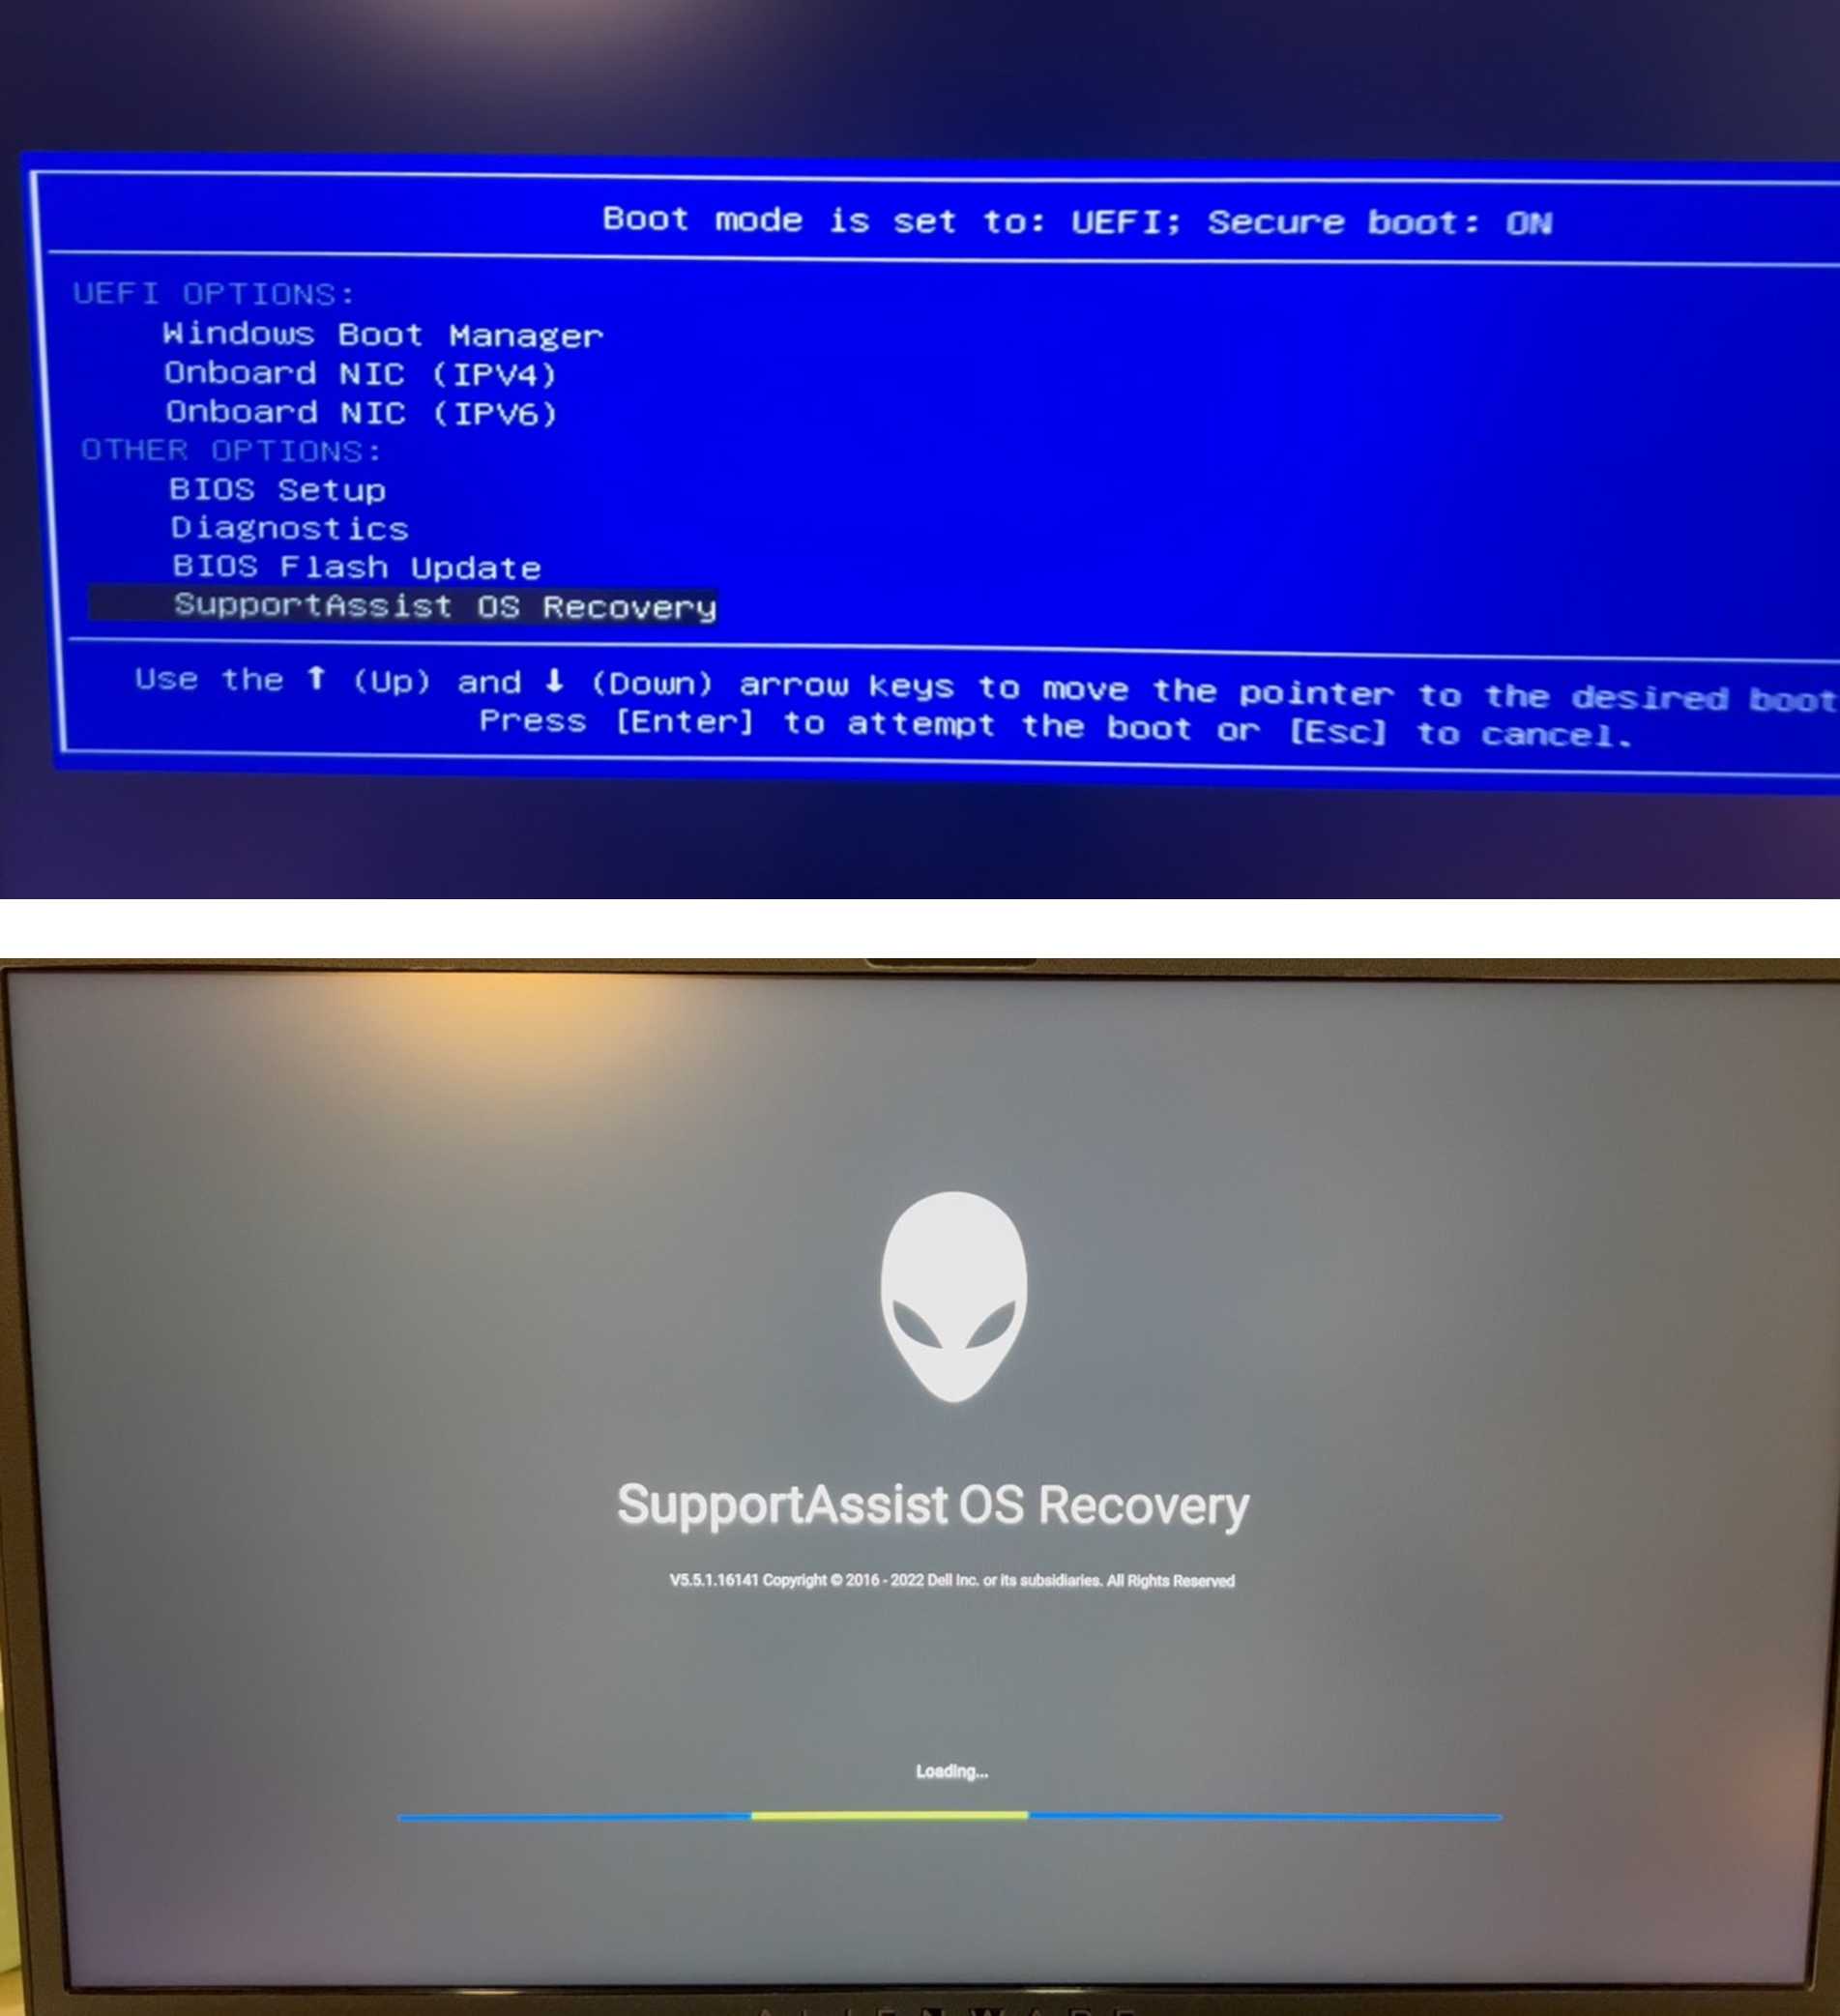 戴尔/外星人,dell/Alienware系统恢复 SupportAssist OS Recovery重建保姆级教程